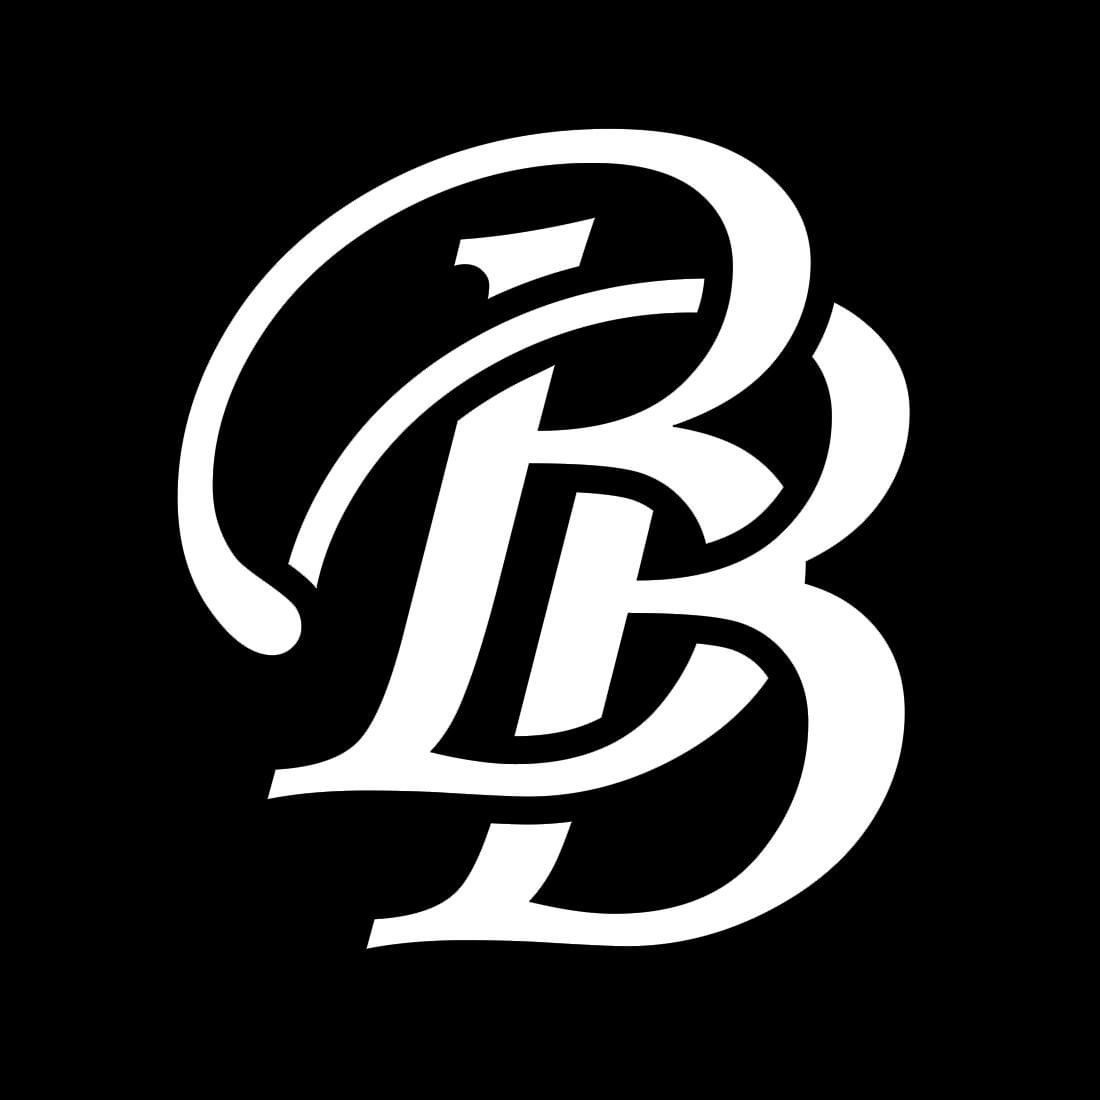 Brighton-logo